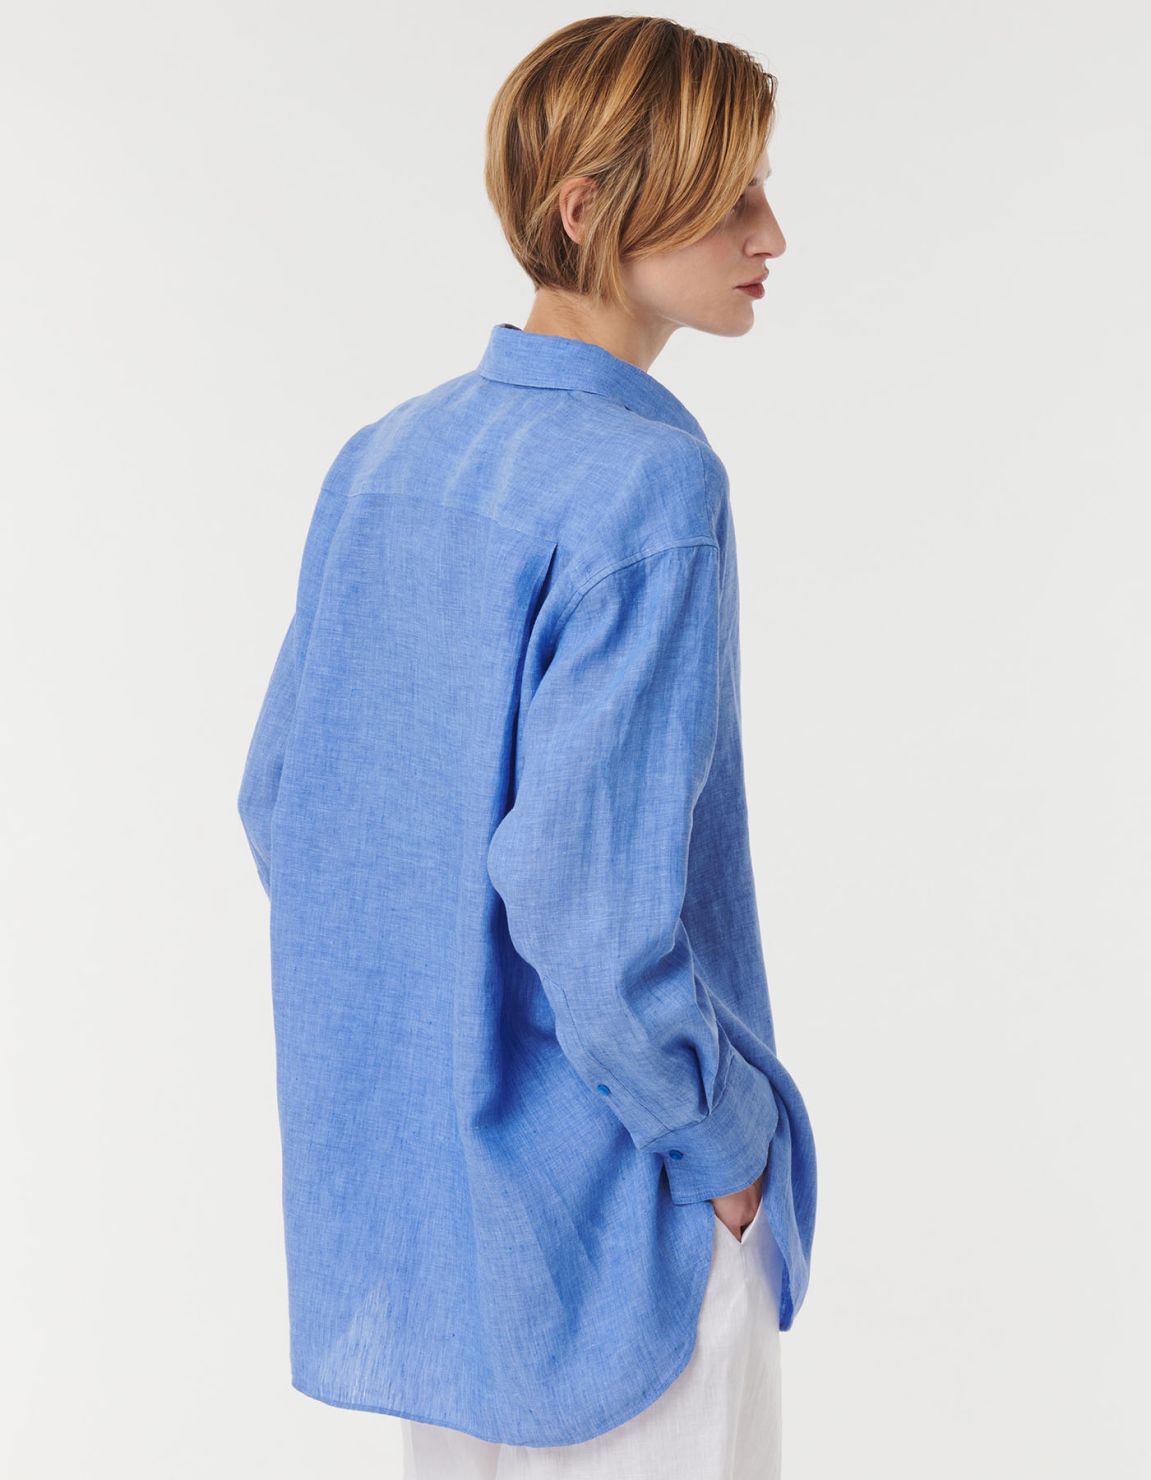 Shirt Deep Sky Blue Linen Solid colour Over 5